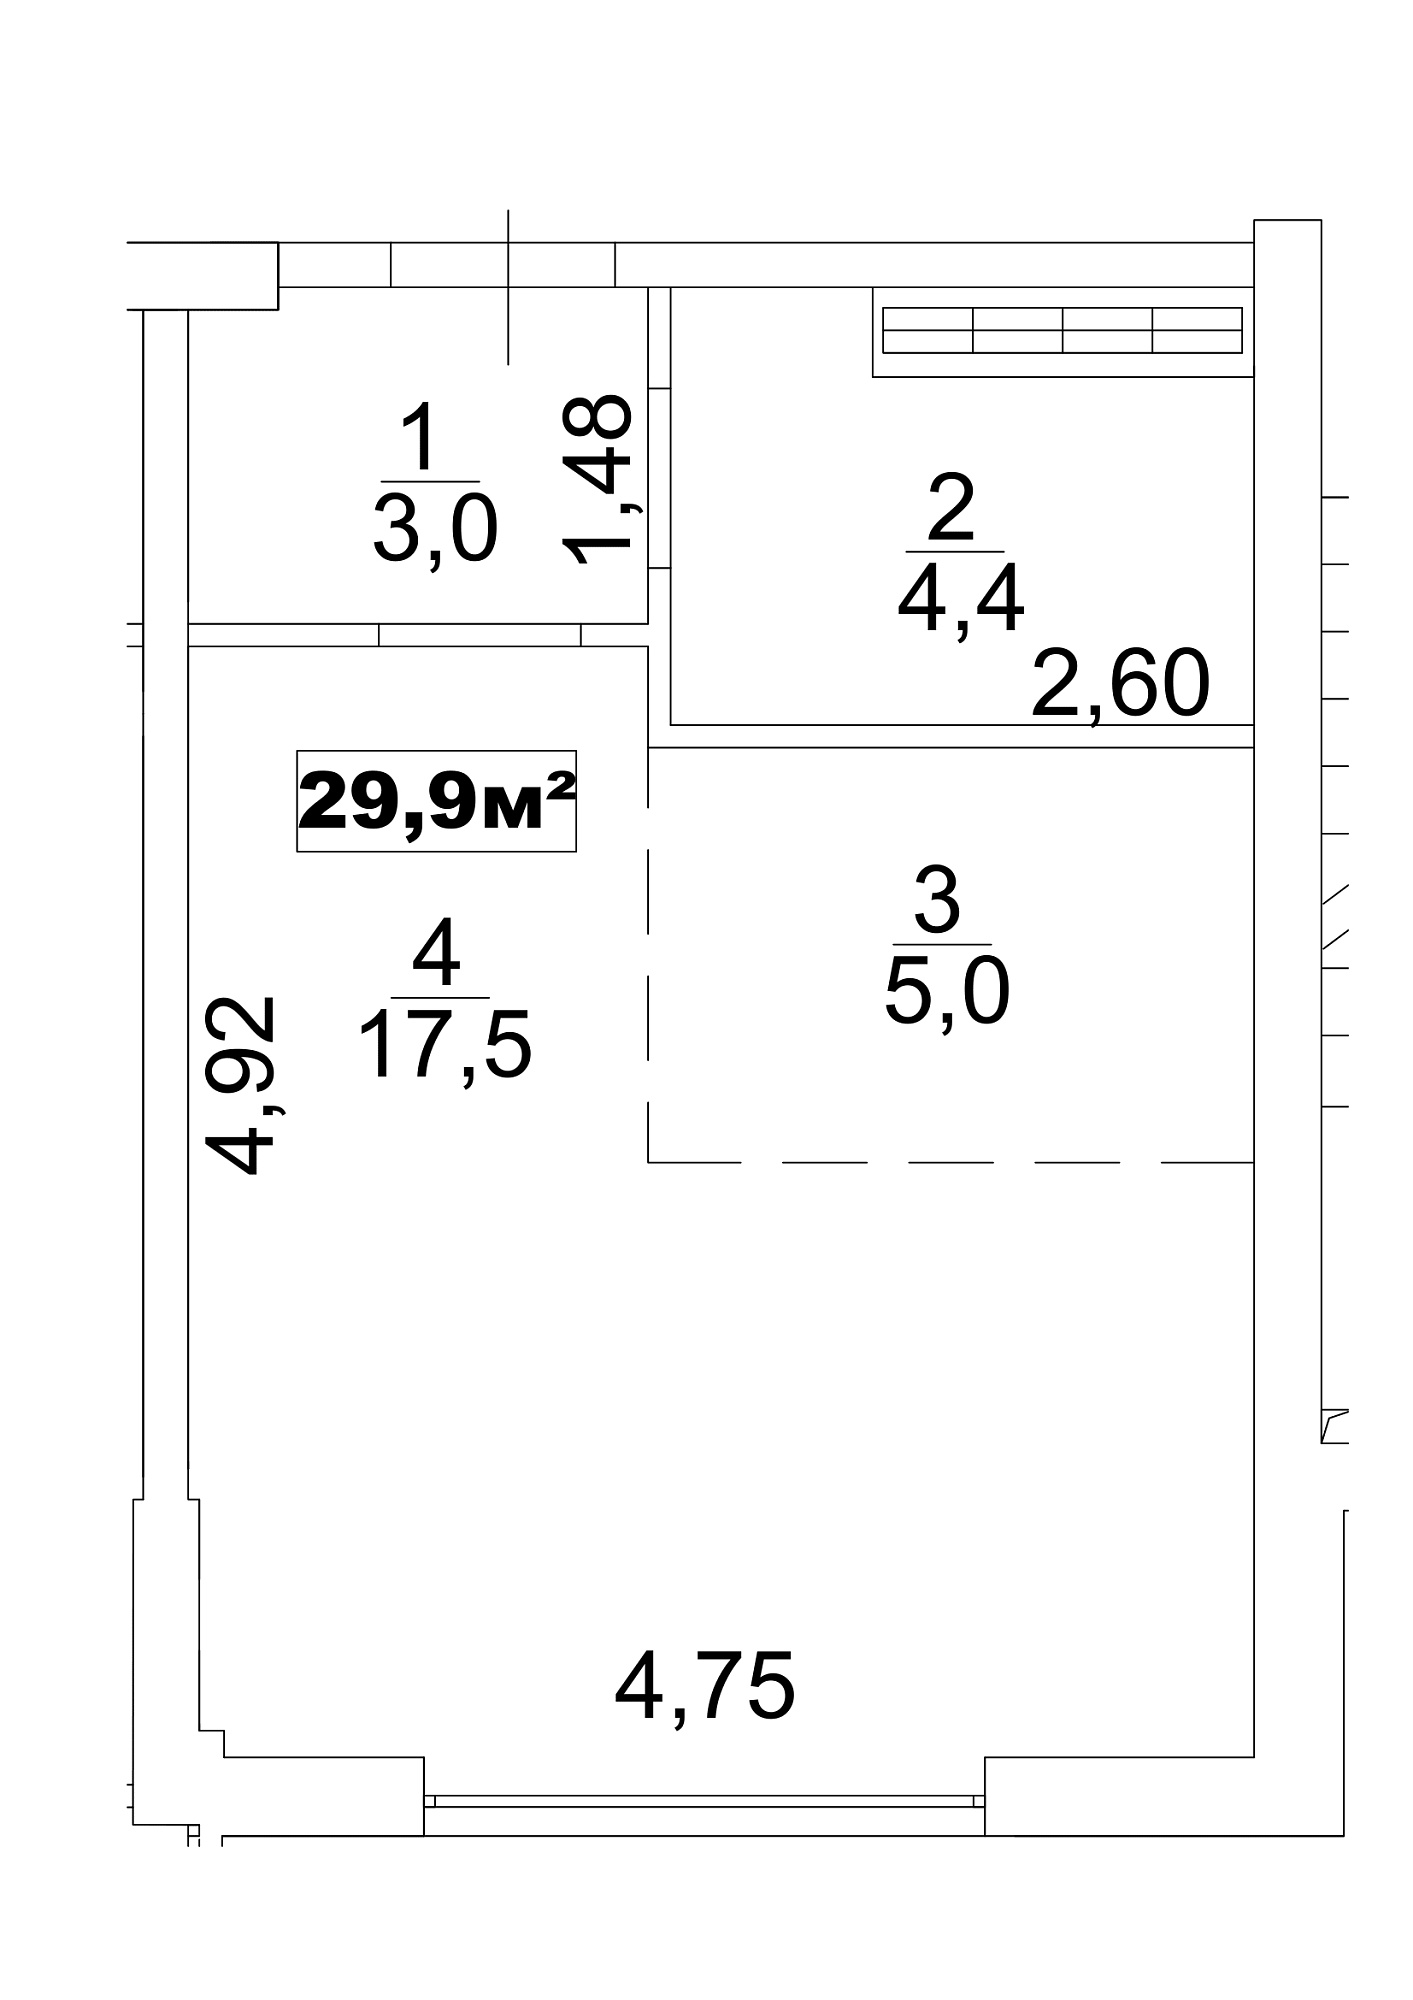 Planning Smart flats area 29.9m2, AB-13-05/0034а.